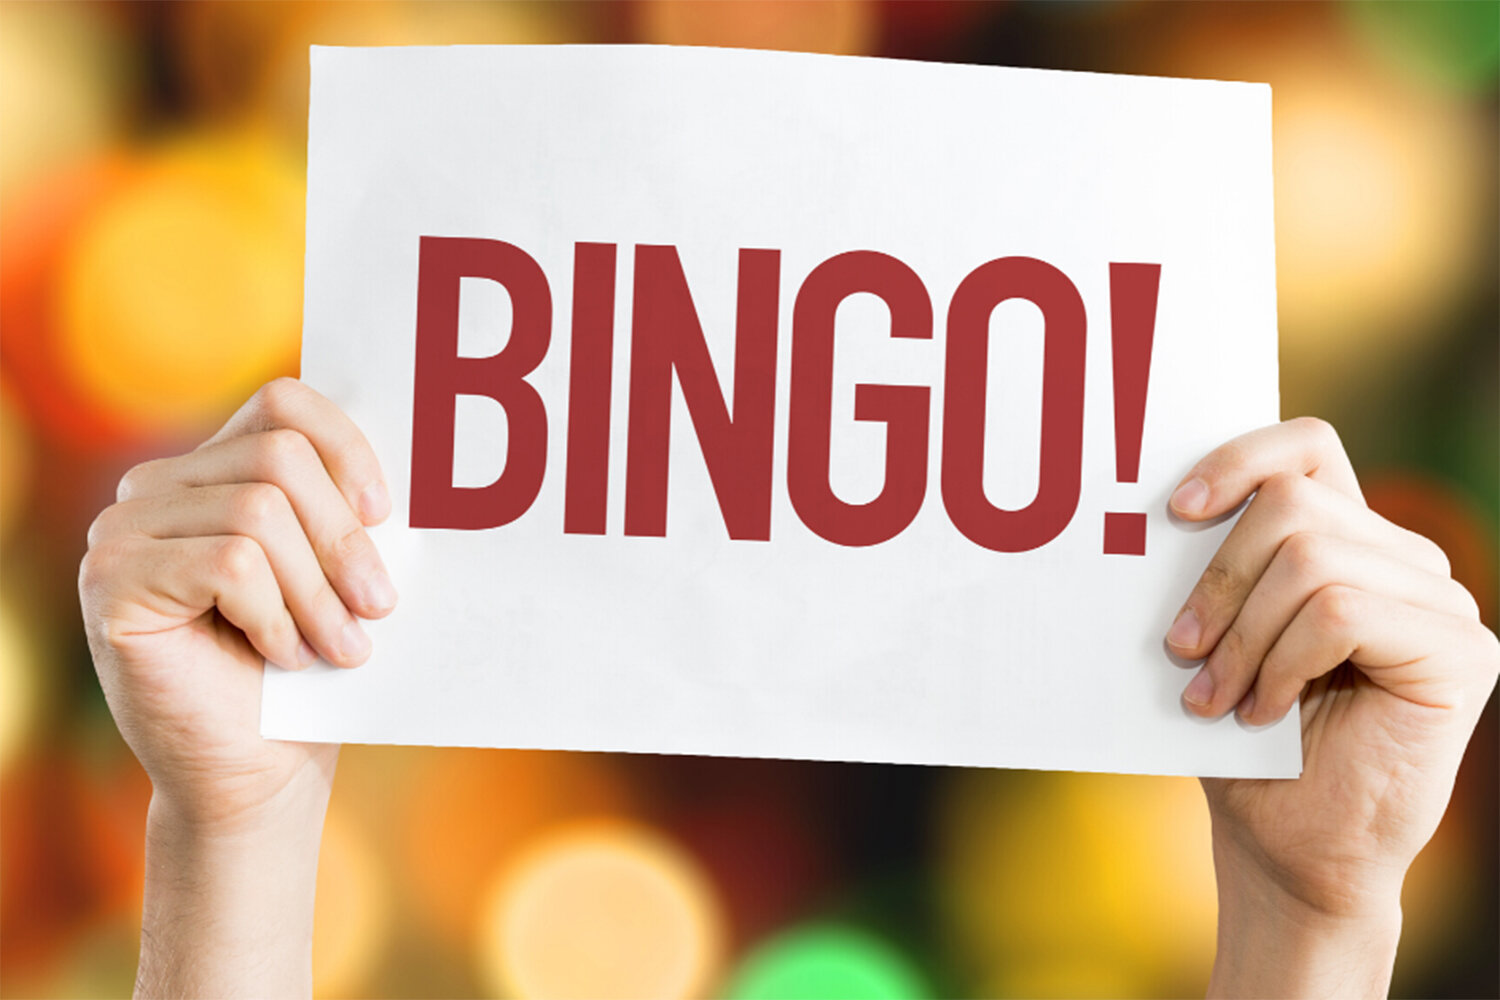 bingo-twitter-and-website-amended-.jpg